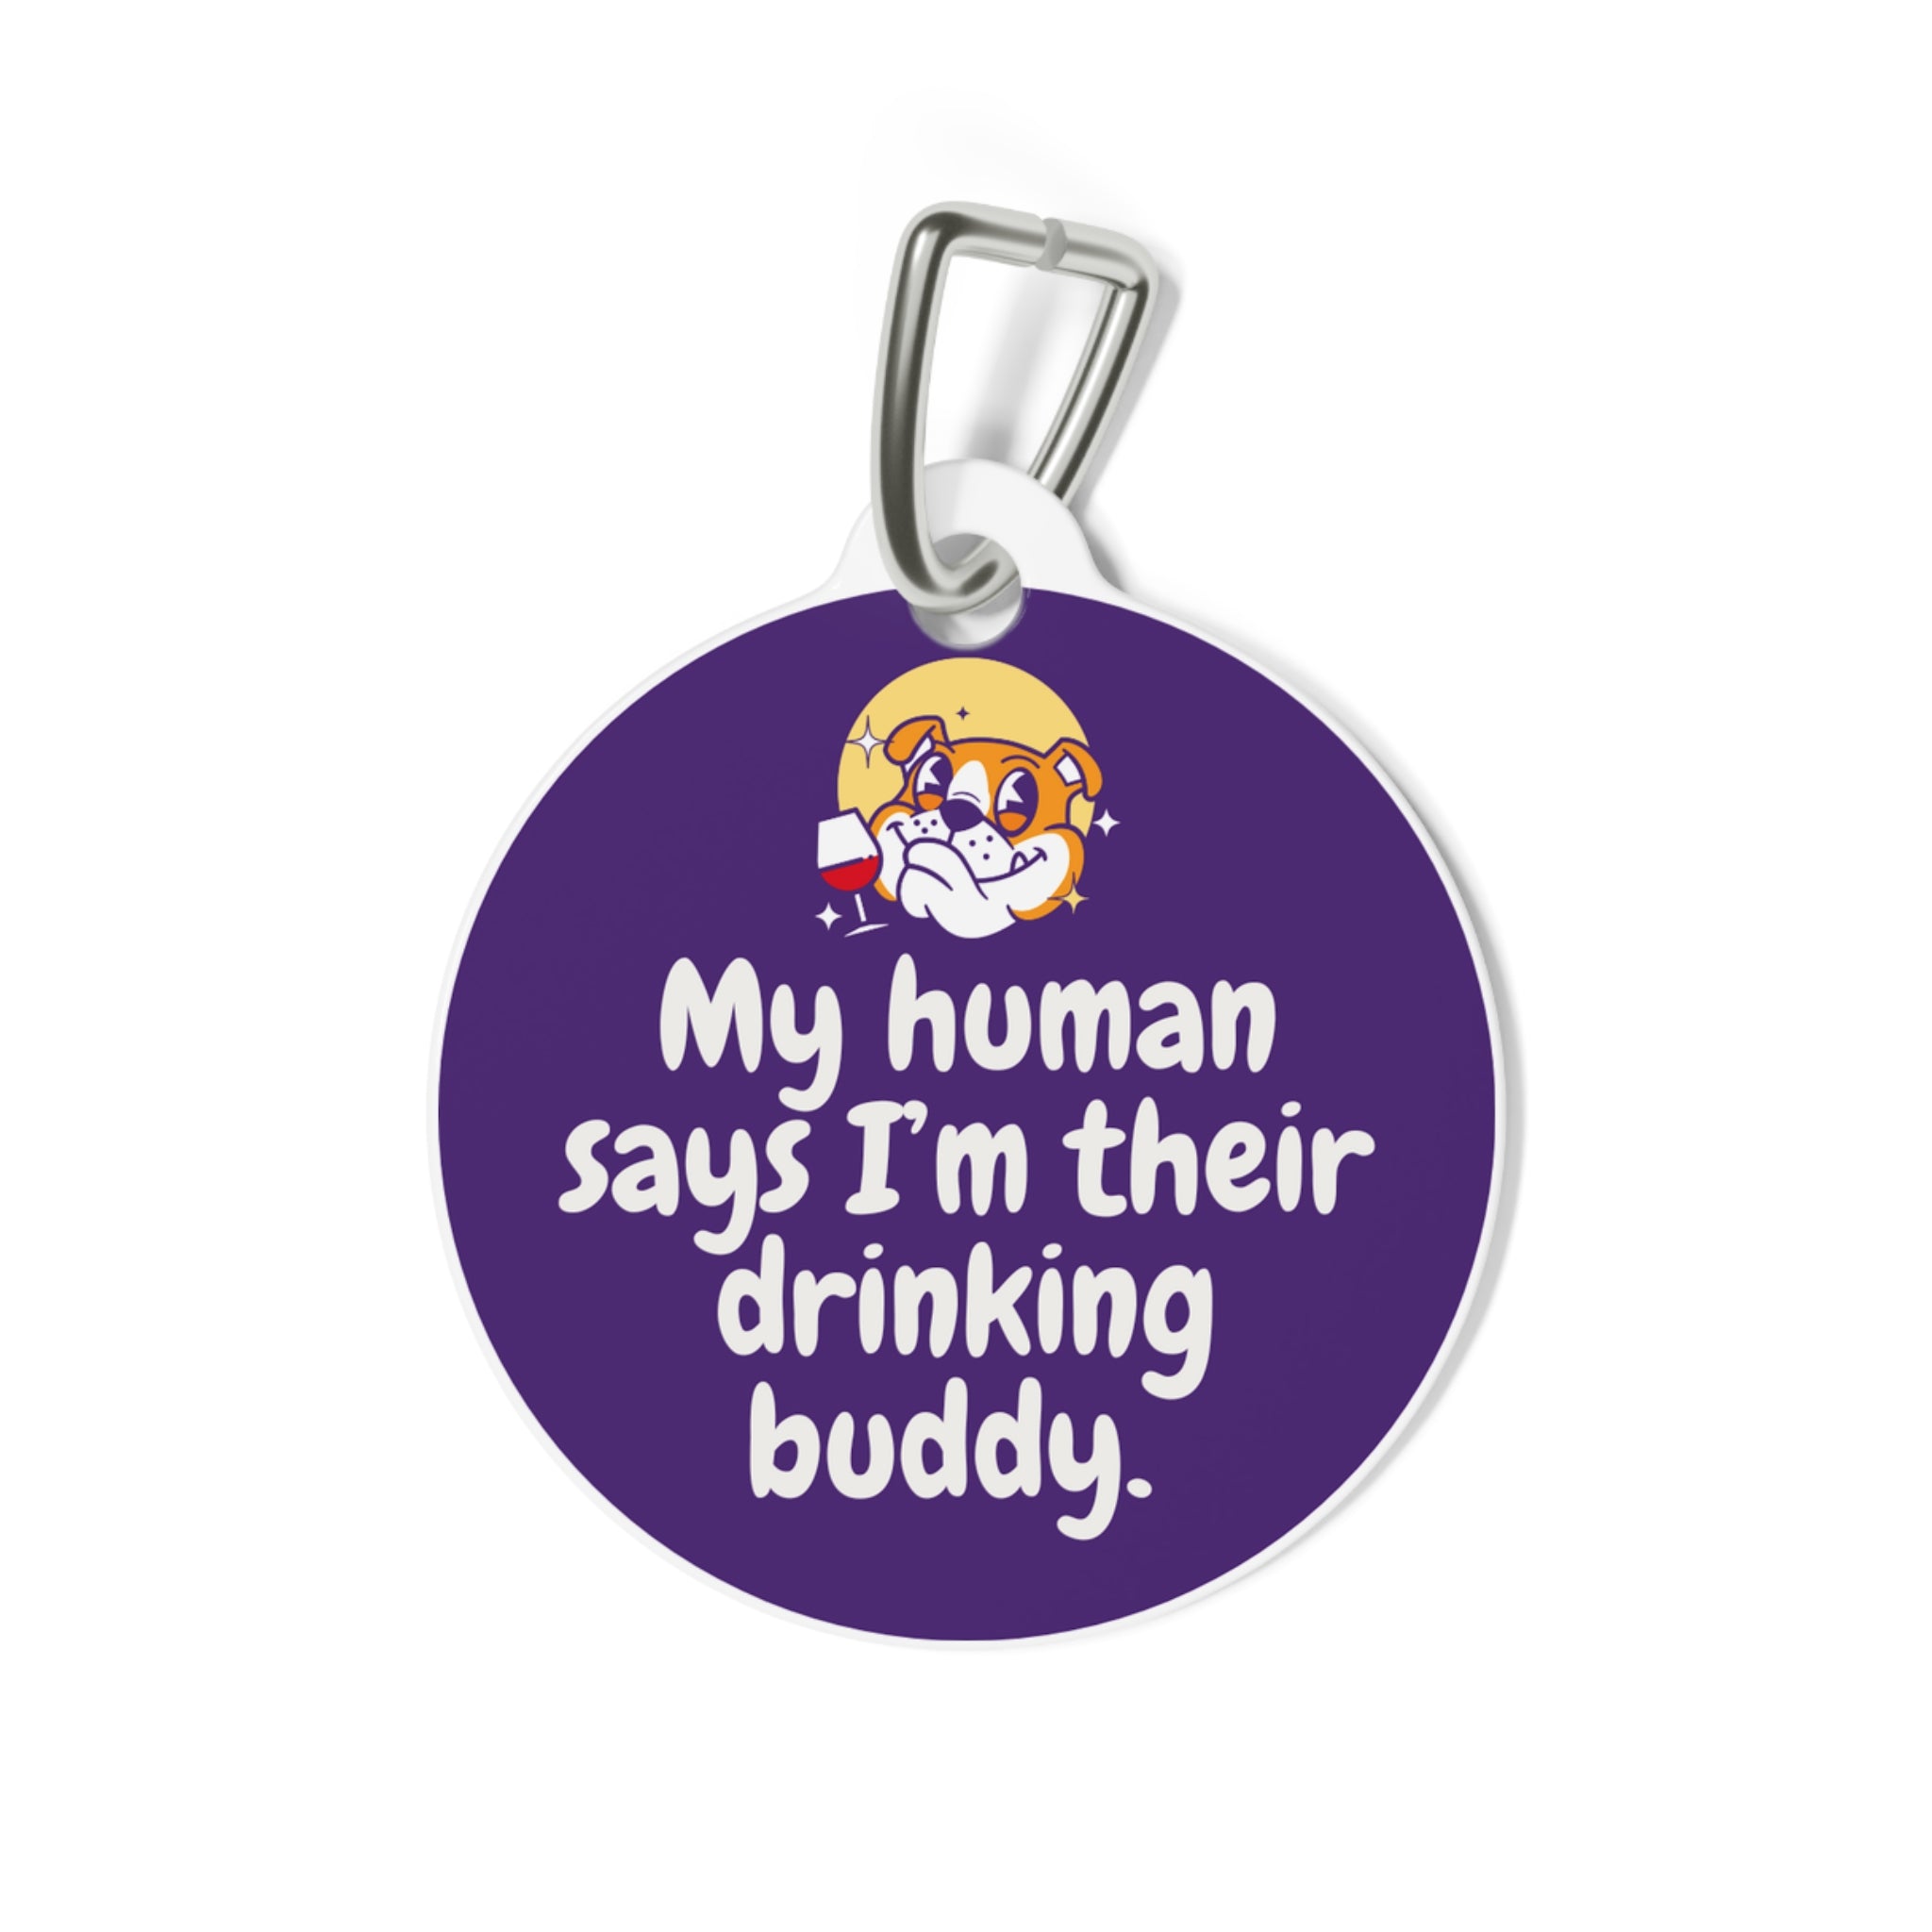 Tipsy Bully Dog Tags: "My Human Says I'm Their Drinking Buddy" Edition - Purple